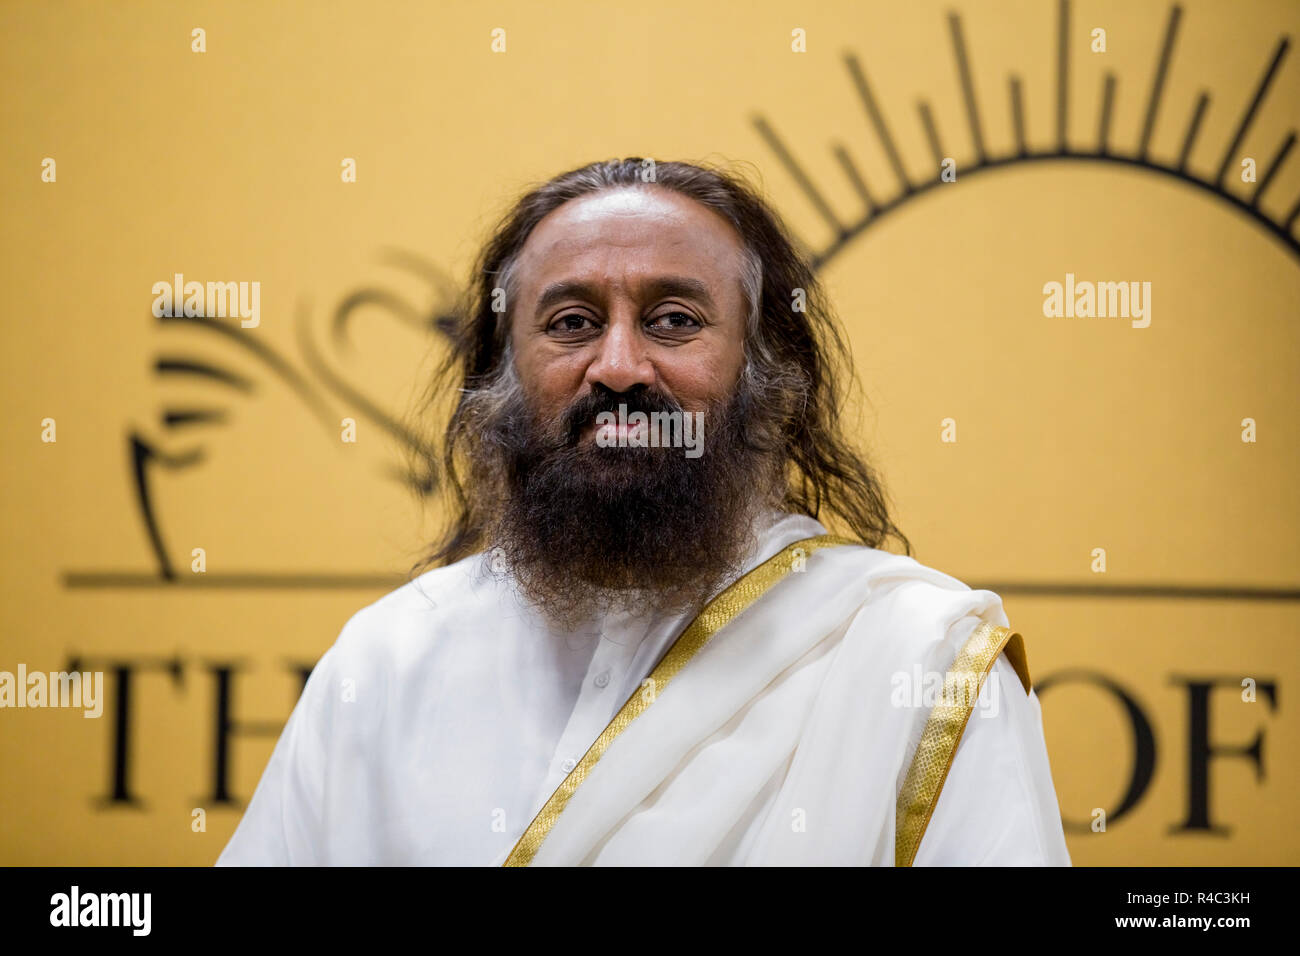 Dubai, Emirati Arabi Uniti - 17 novembre 2018: Il guru spirituale indiano Sri Sri Ravi Shankar in visita negli Emirati Arabi Uniti per condurre una lezione di meditazione Foto Stock